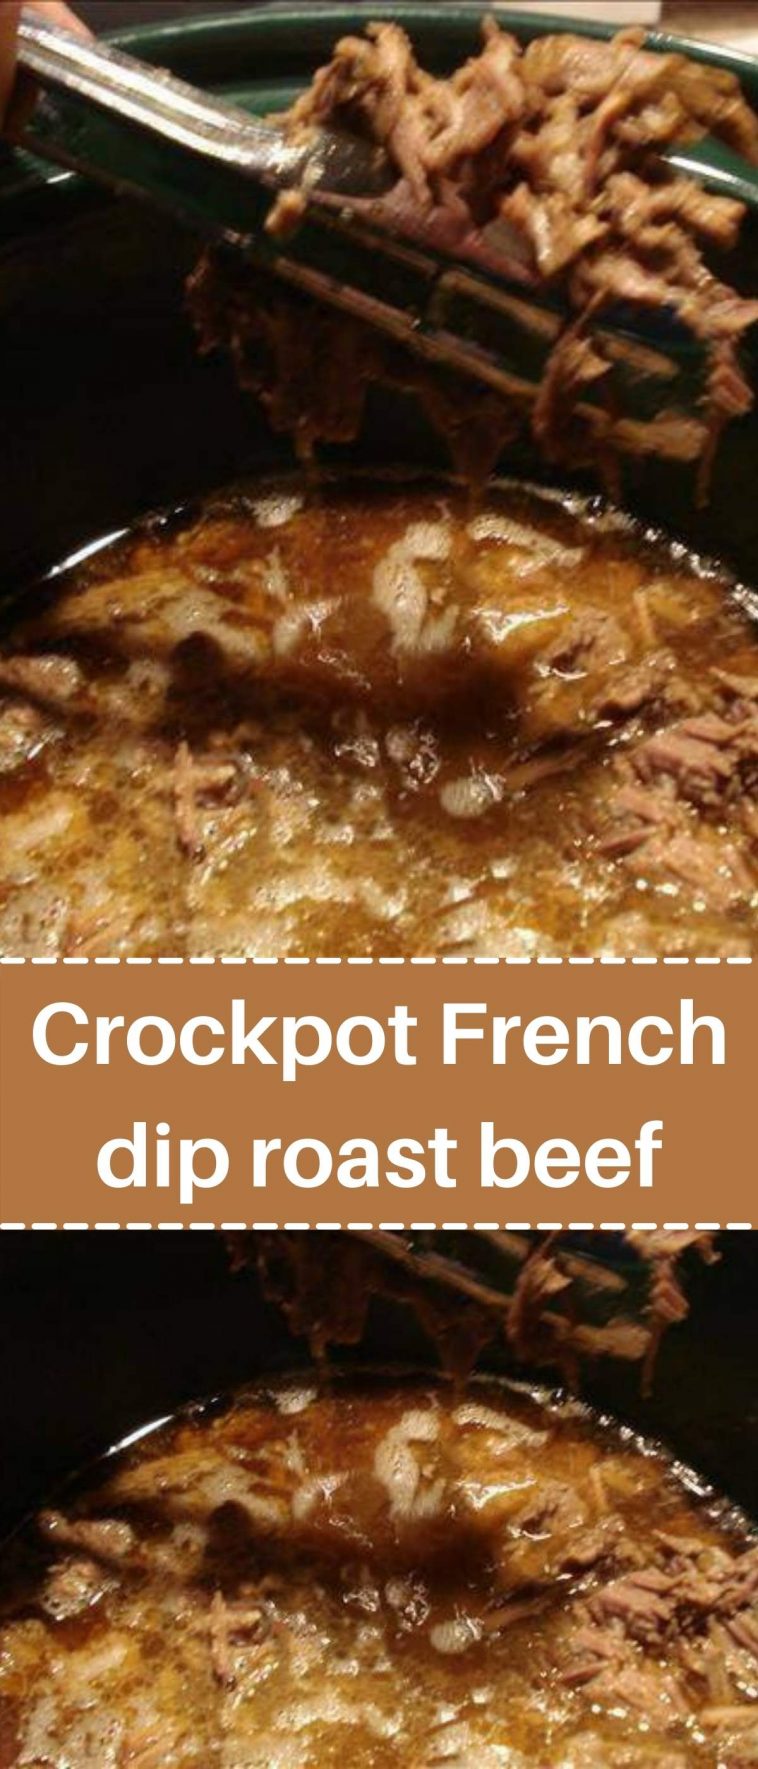 Crockpot French dip roast beef